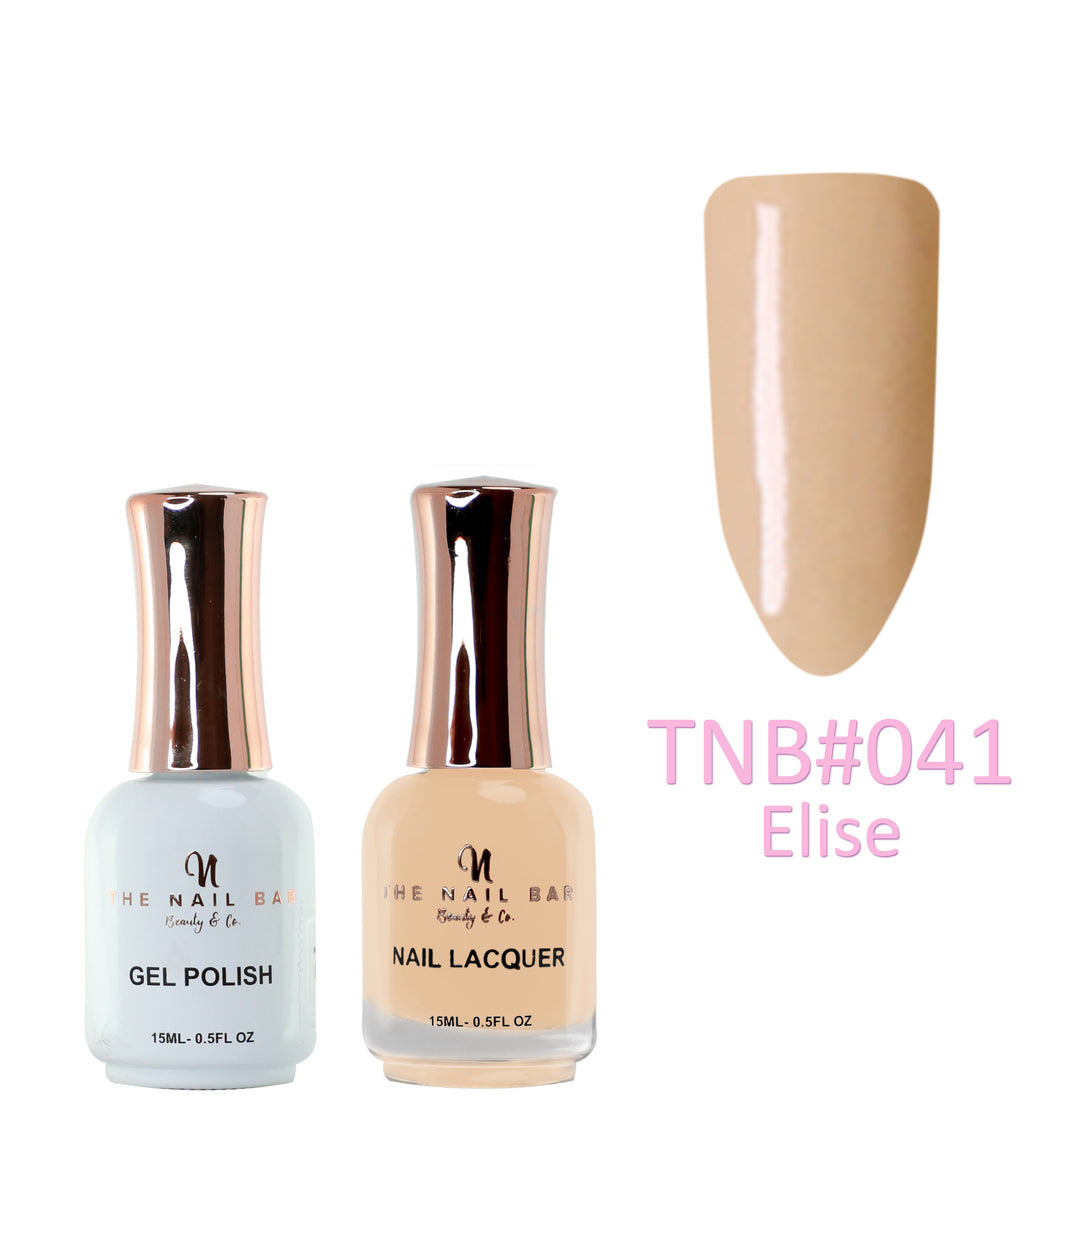 Dual Polish/Gel colour matching (15ml) - Elise - The Nail Bar Beauty & Co.